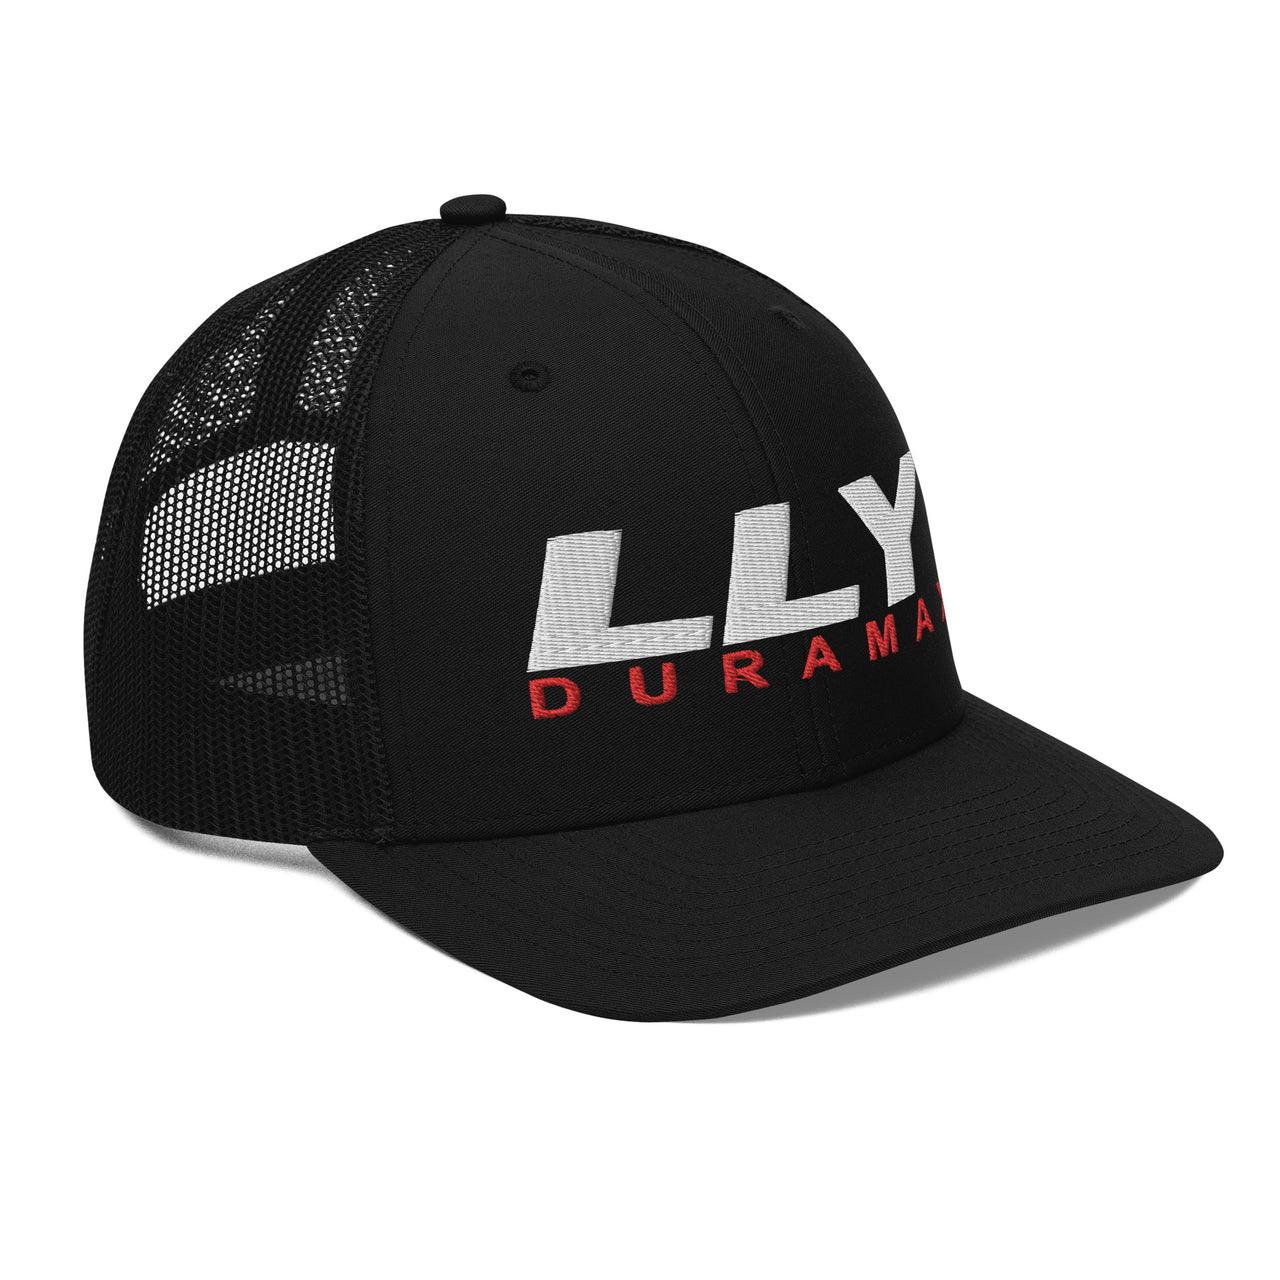 LLY Duramax Trucker Cap Embroidered Baseball Hat